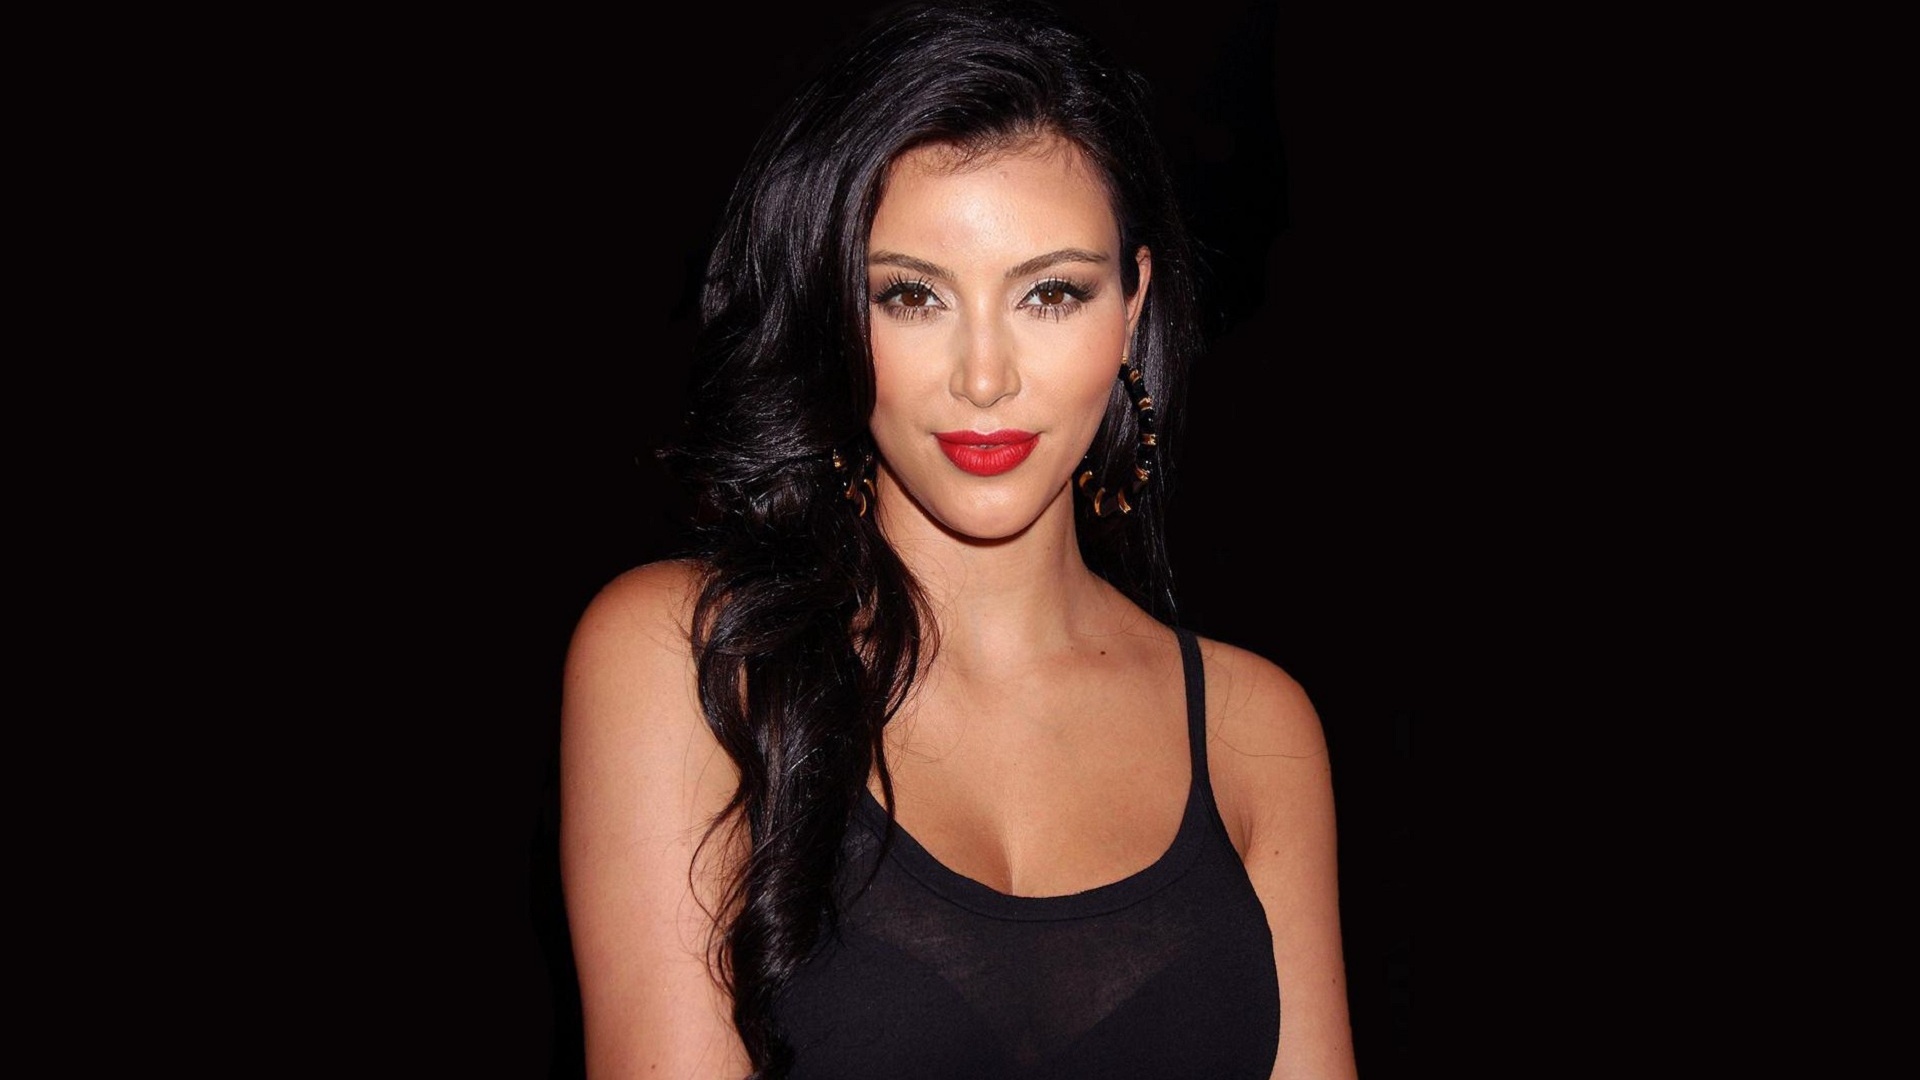 Kim Kardashian Wallpaper Image Photos Pictures Background